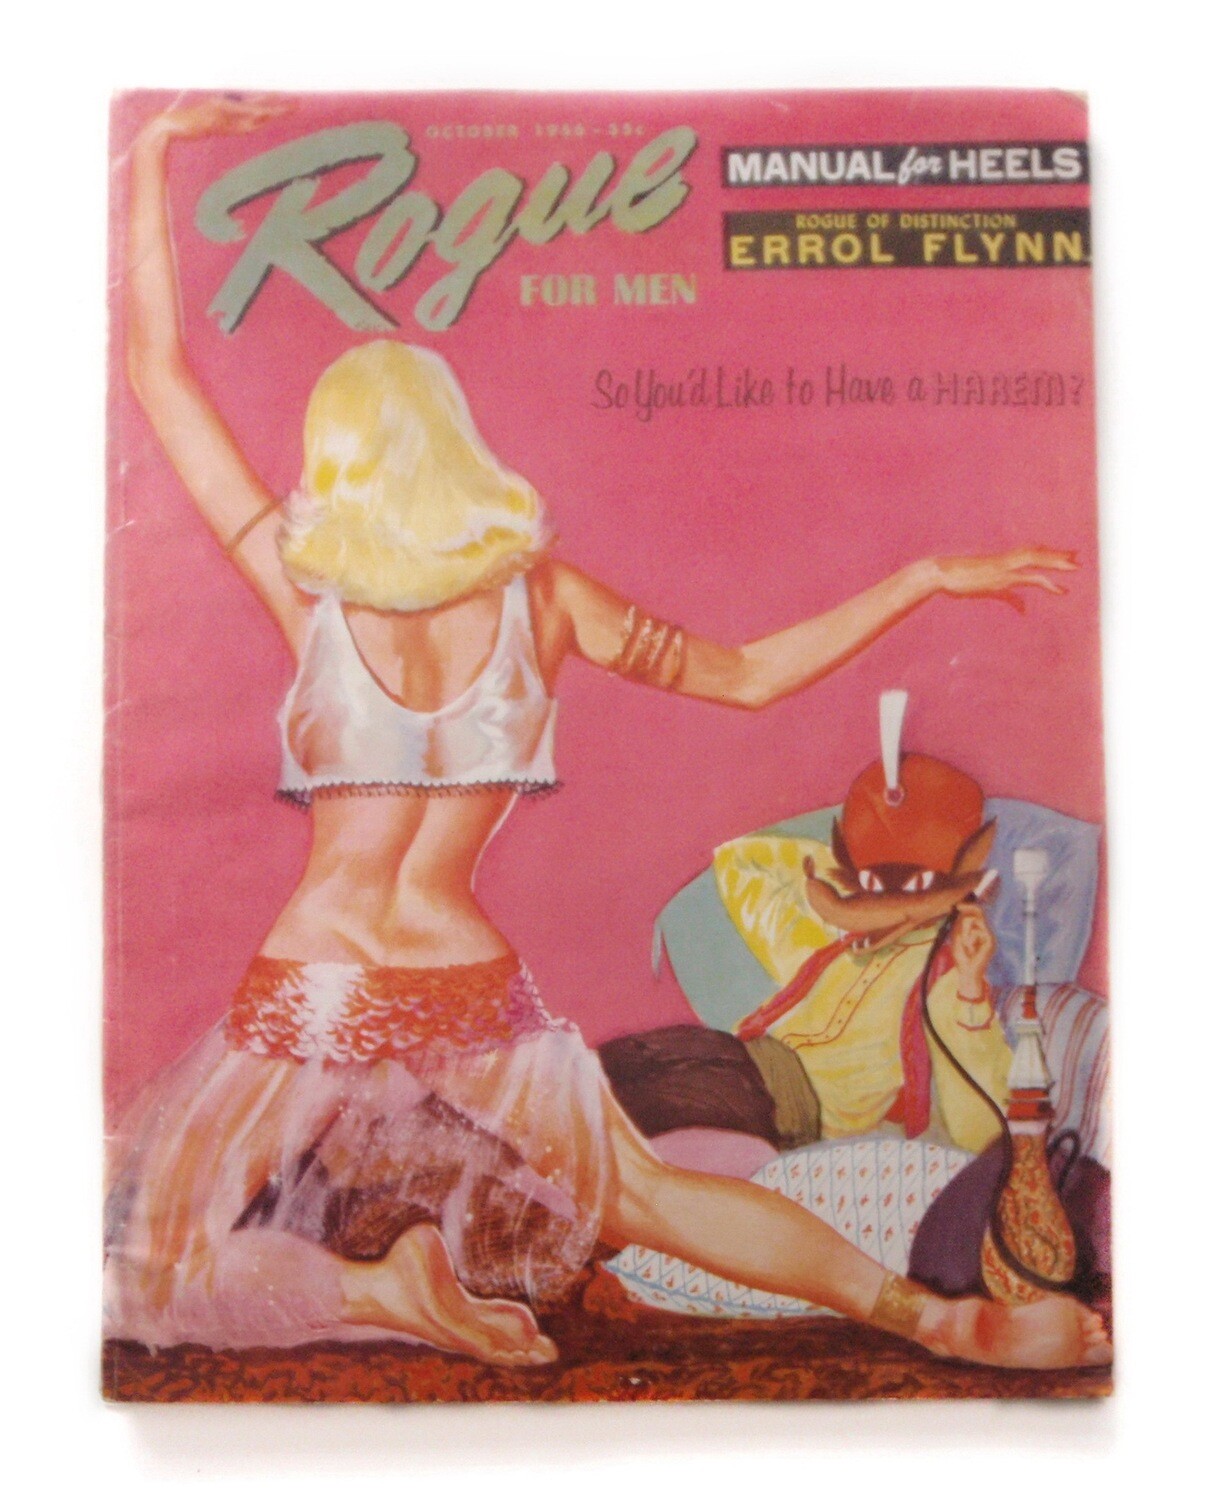 October 1, 1956 Rogue Magazine lead article / story Rogue of Distinction Errol Flynn 